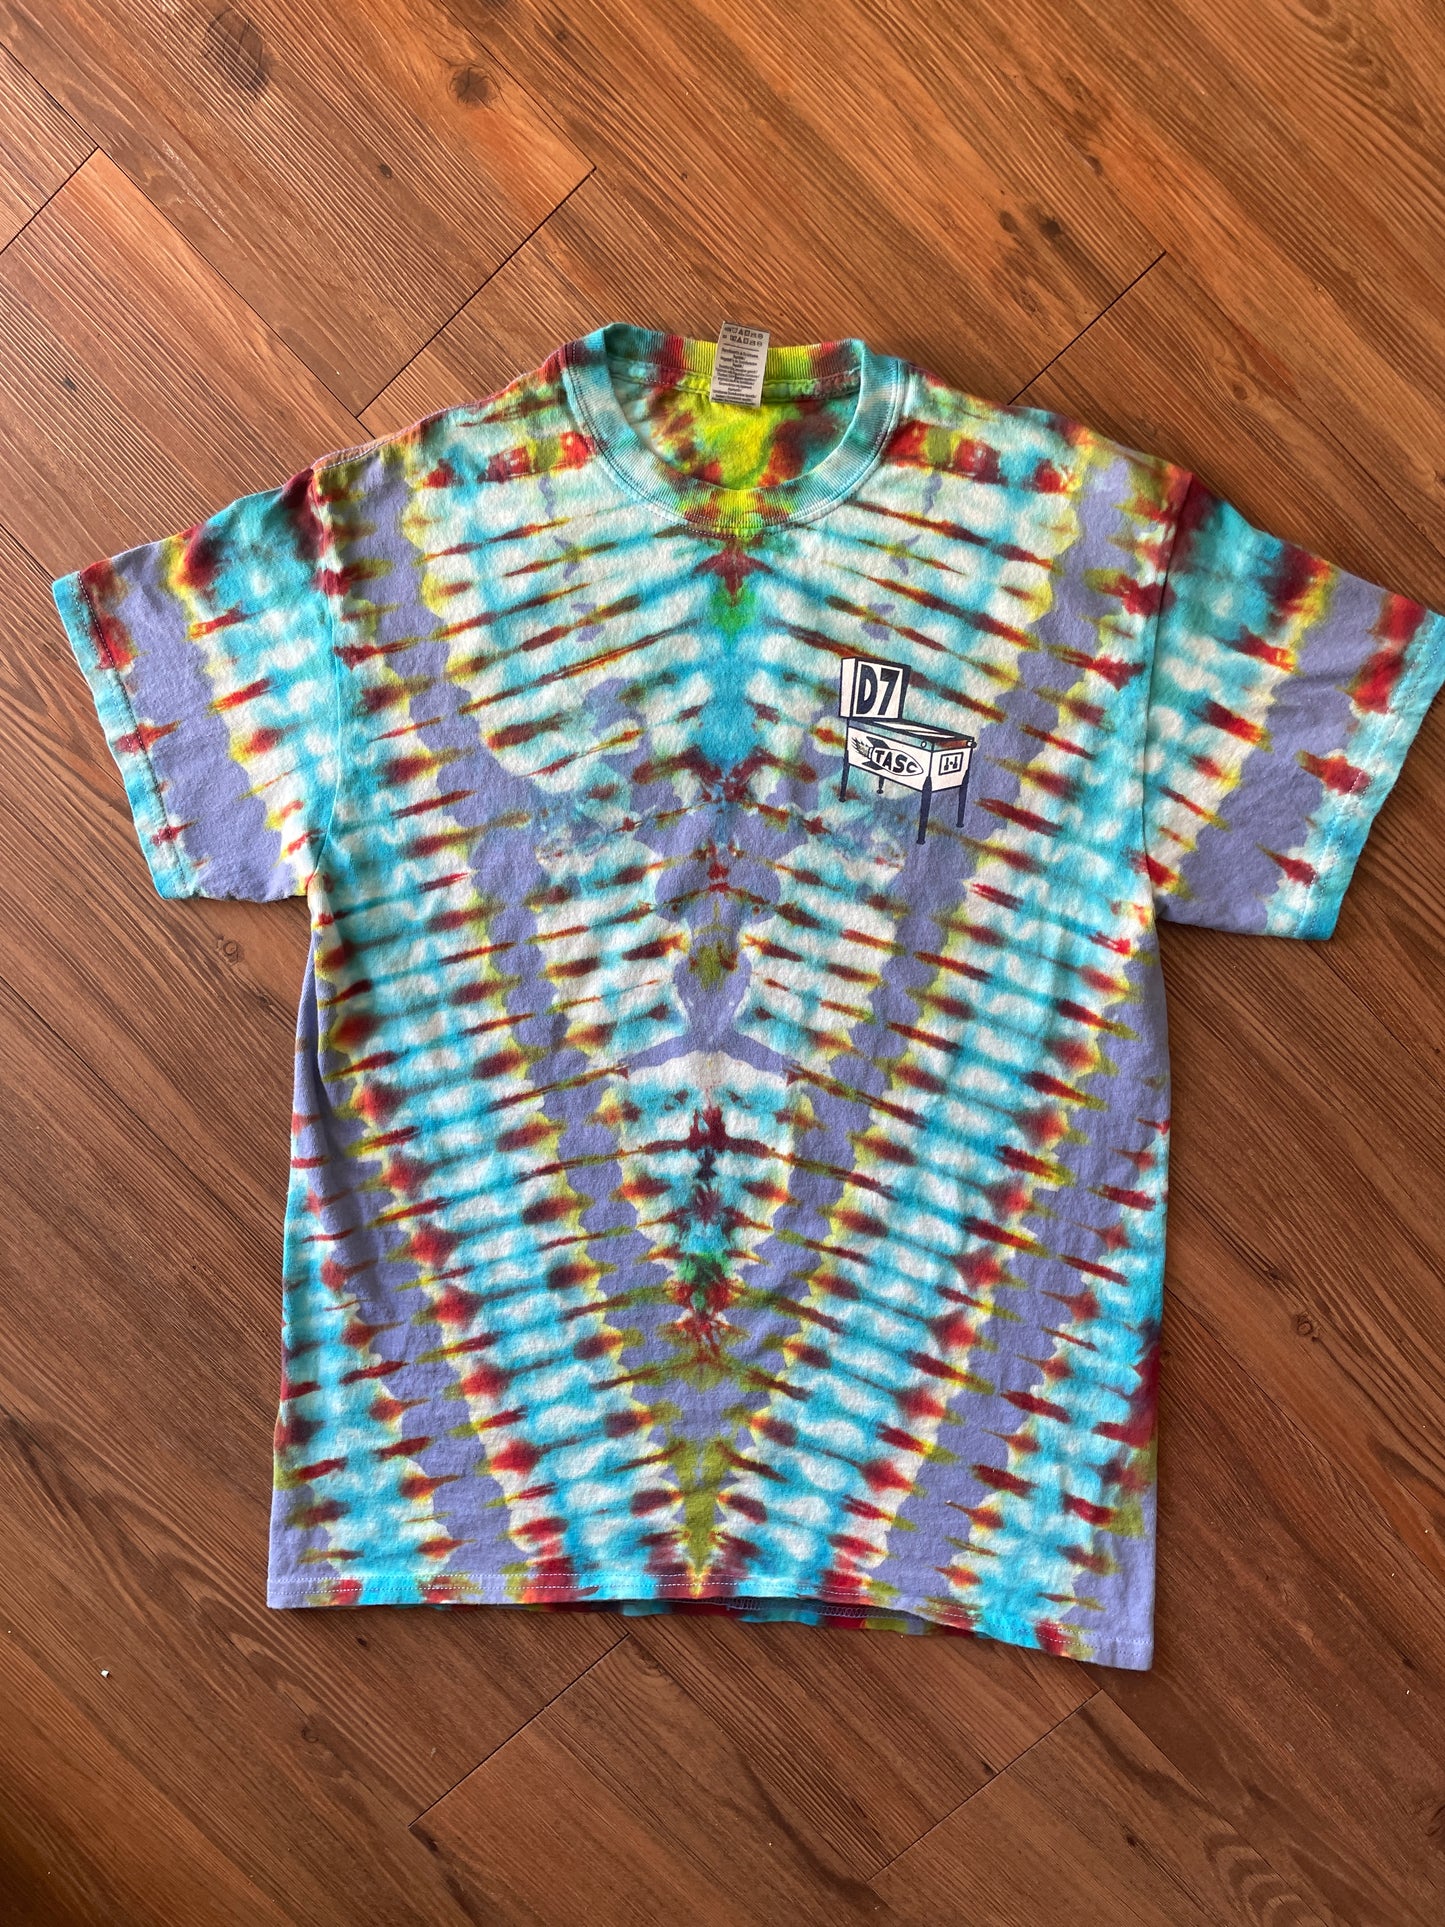 MEDIUM Men’s Pinball Beat Your High Score Handmade Tie Dye T-Shirt | One-Of-a-Kind Funky Multicolor Short Sleeve